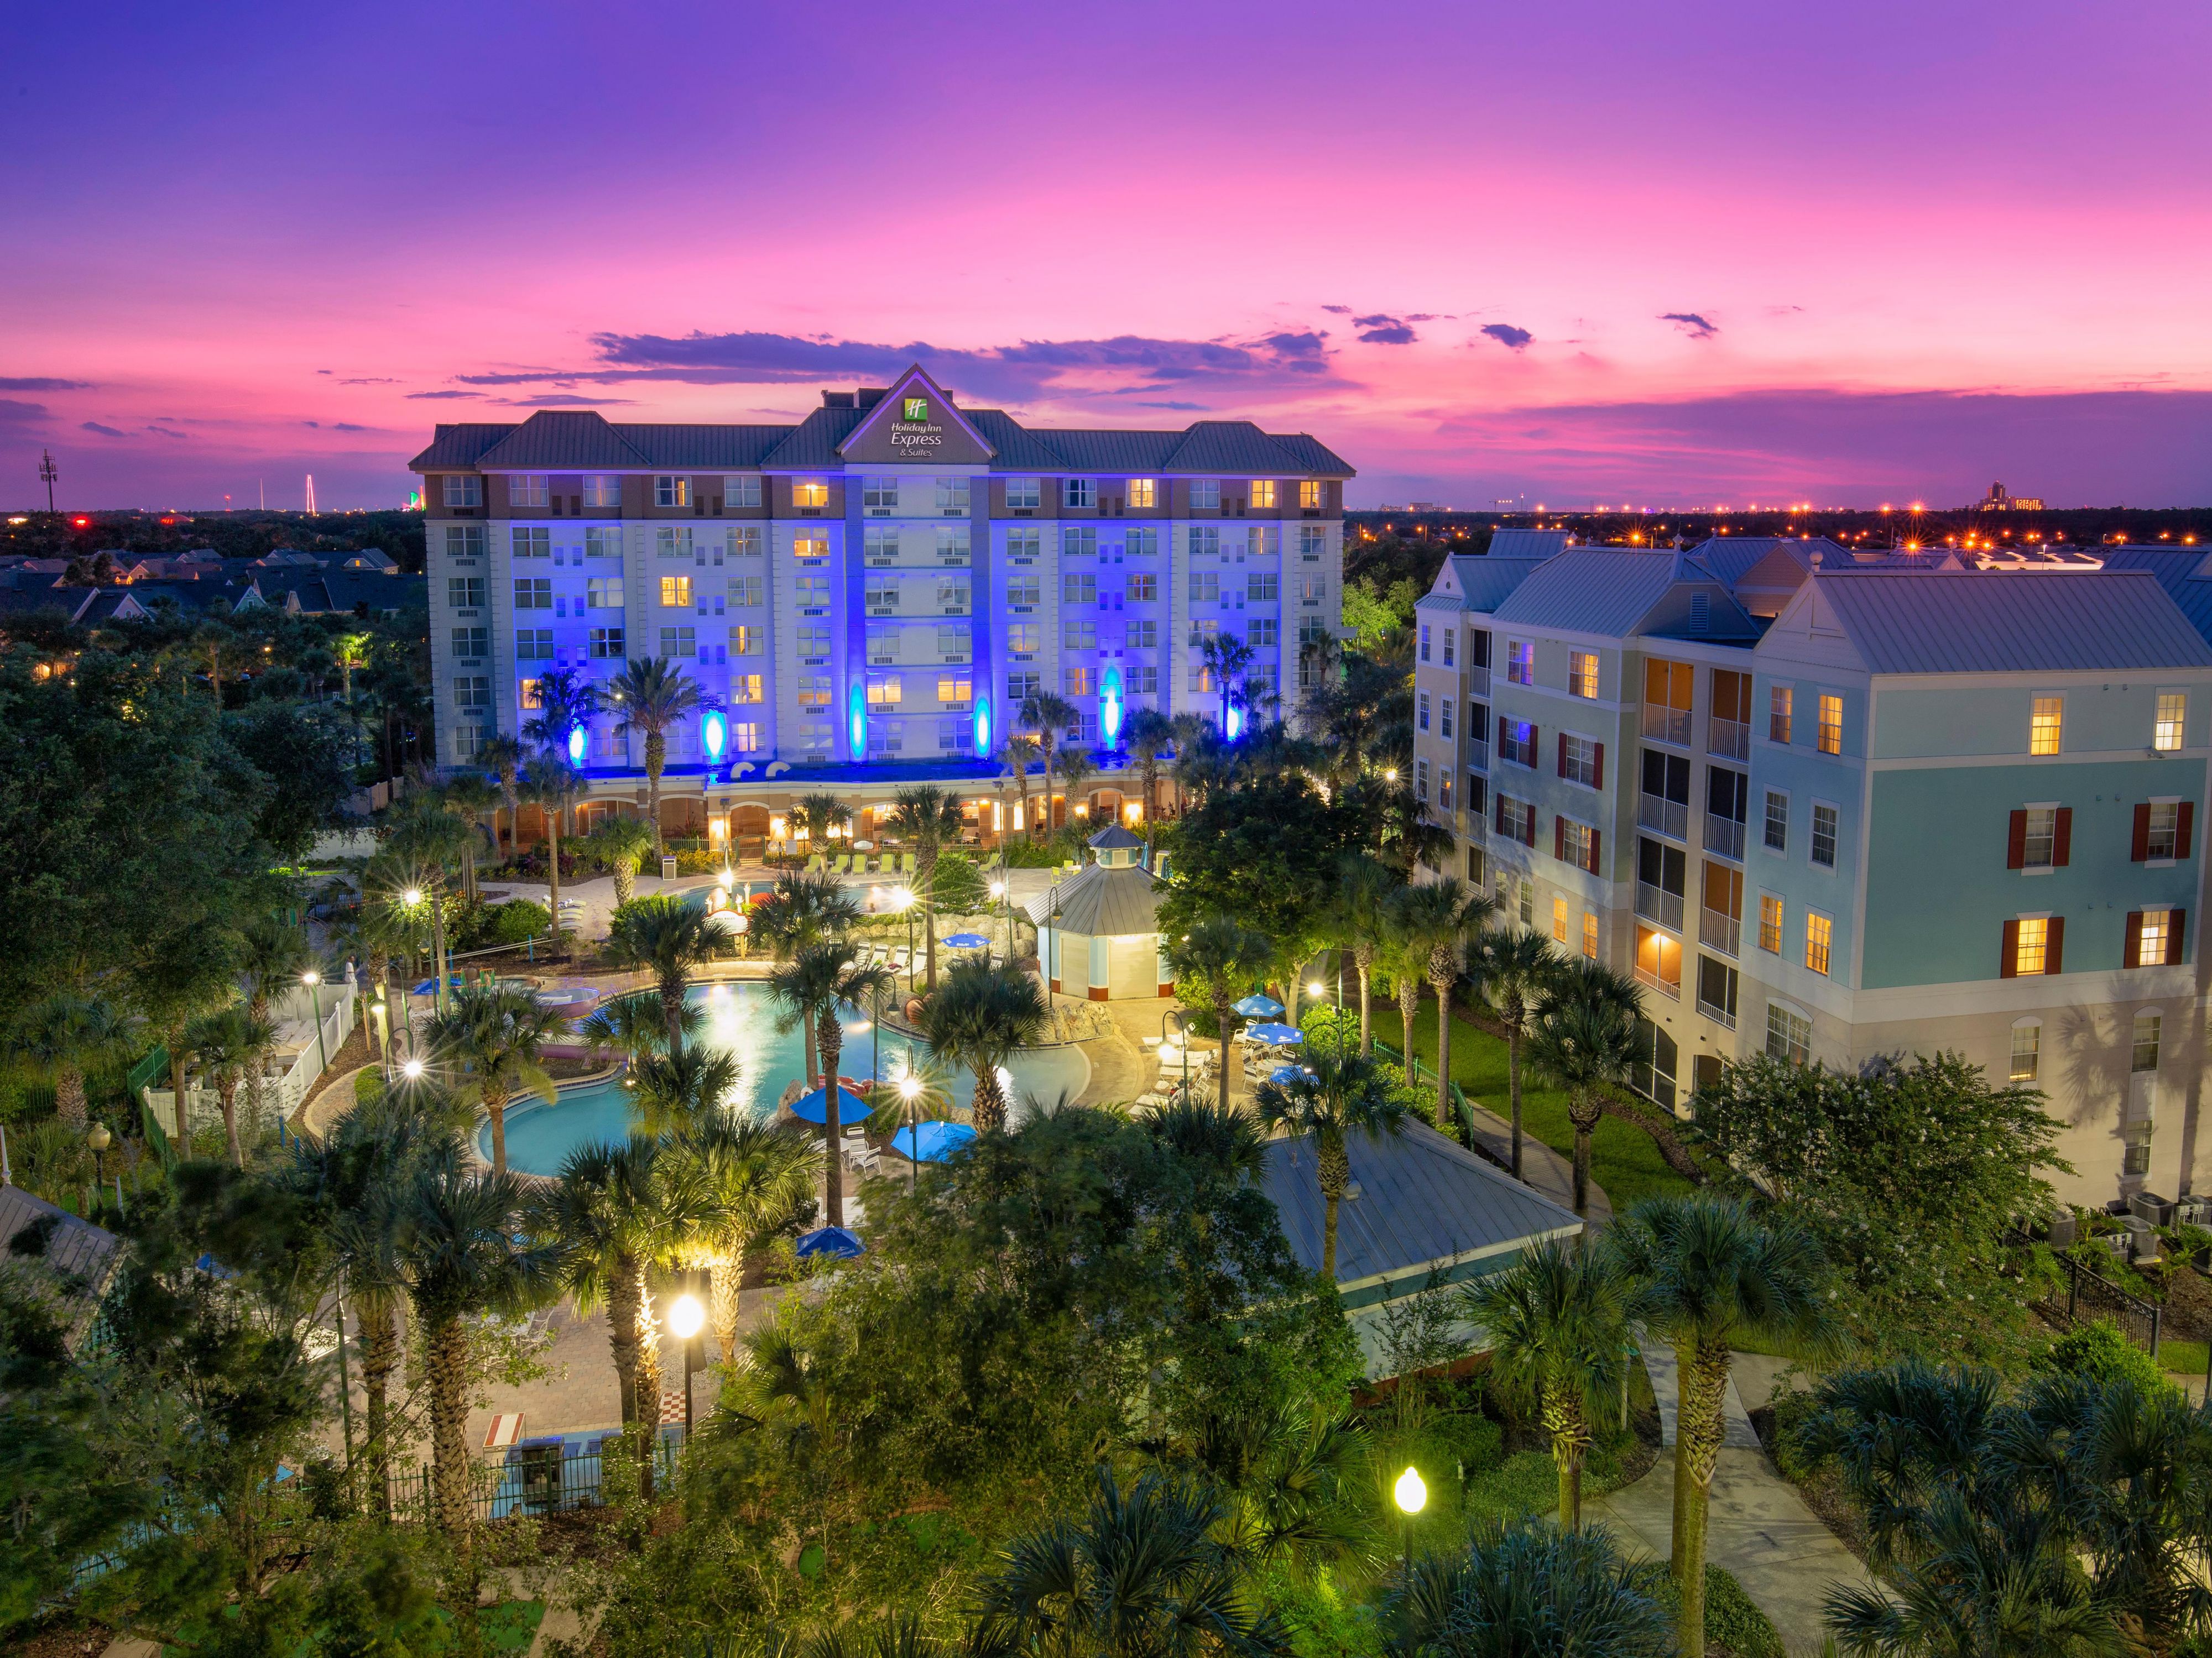 Hotels Near Legoland Florida In Winter Haven Florida - 